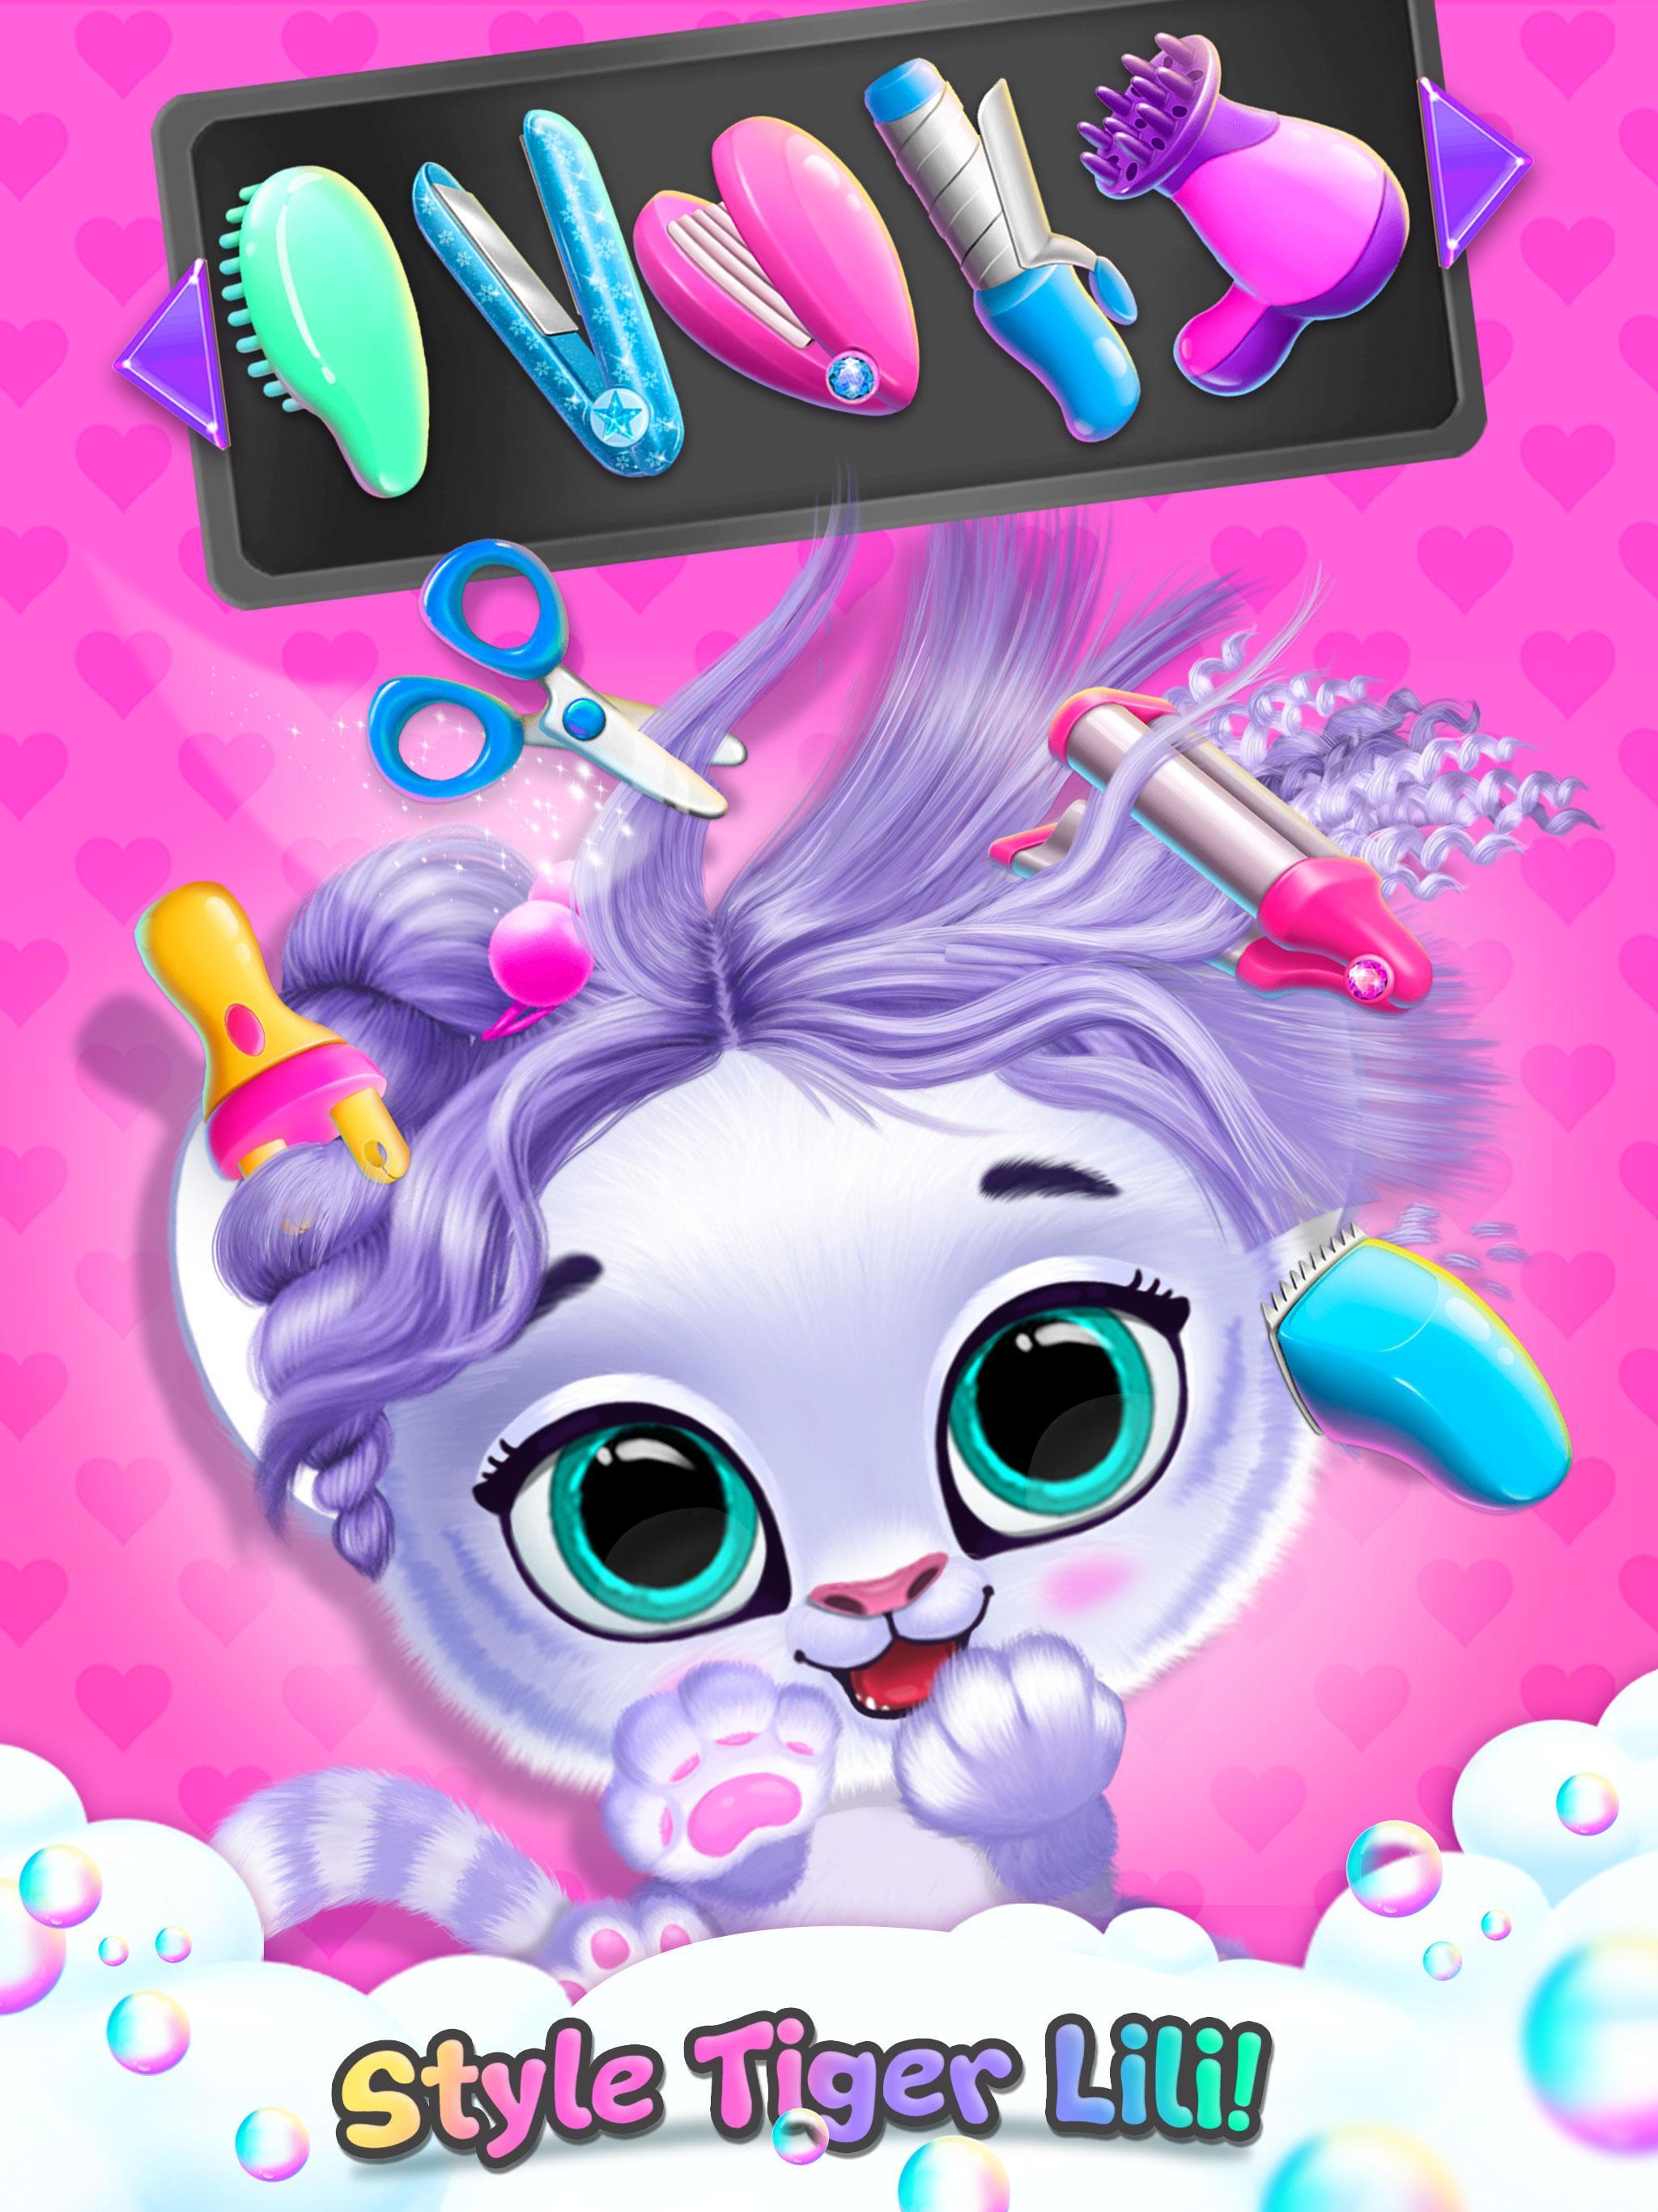 Kiki & Fifi Bubble Party - Fun with Virtual Pets 1.1.21 Screenshot 17